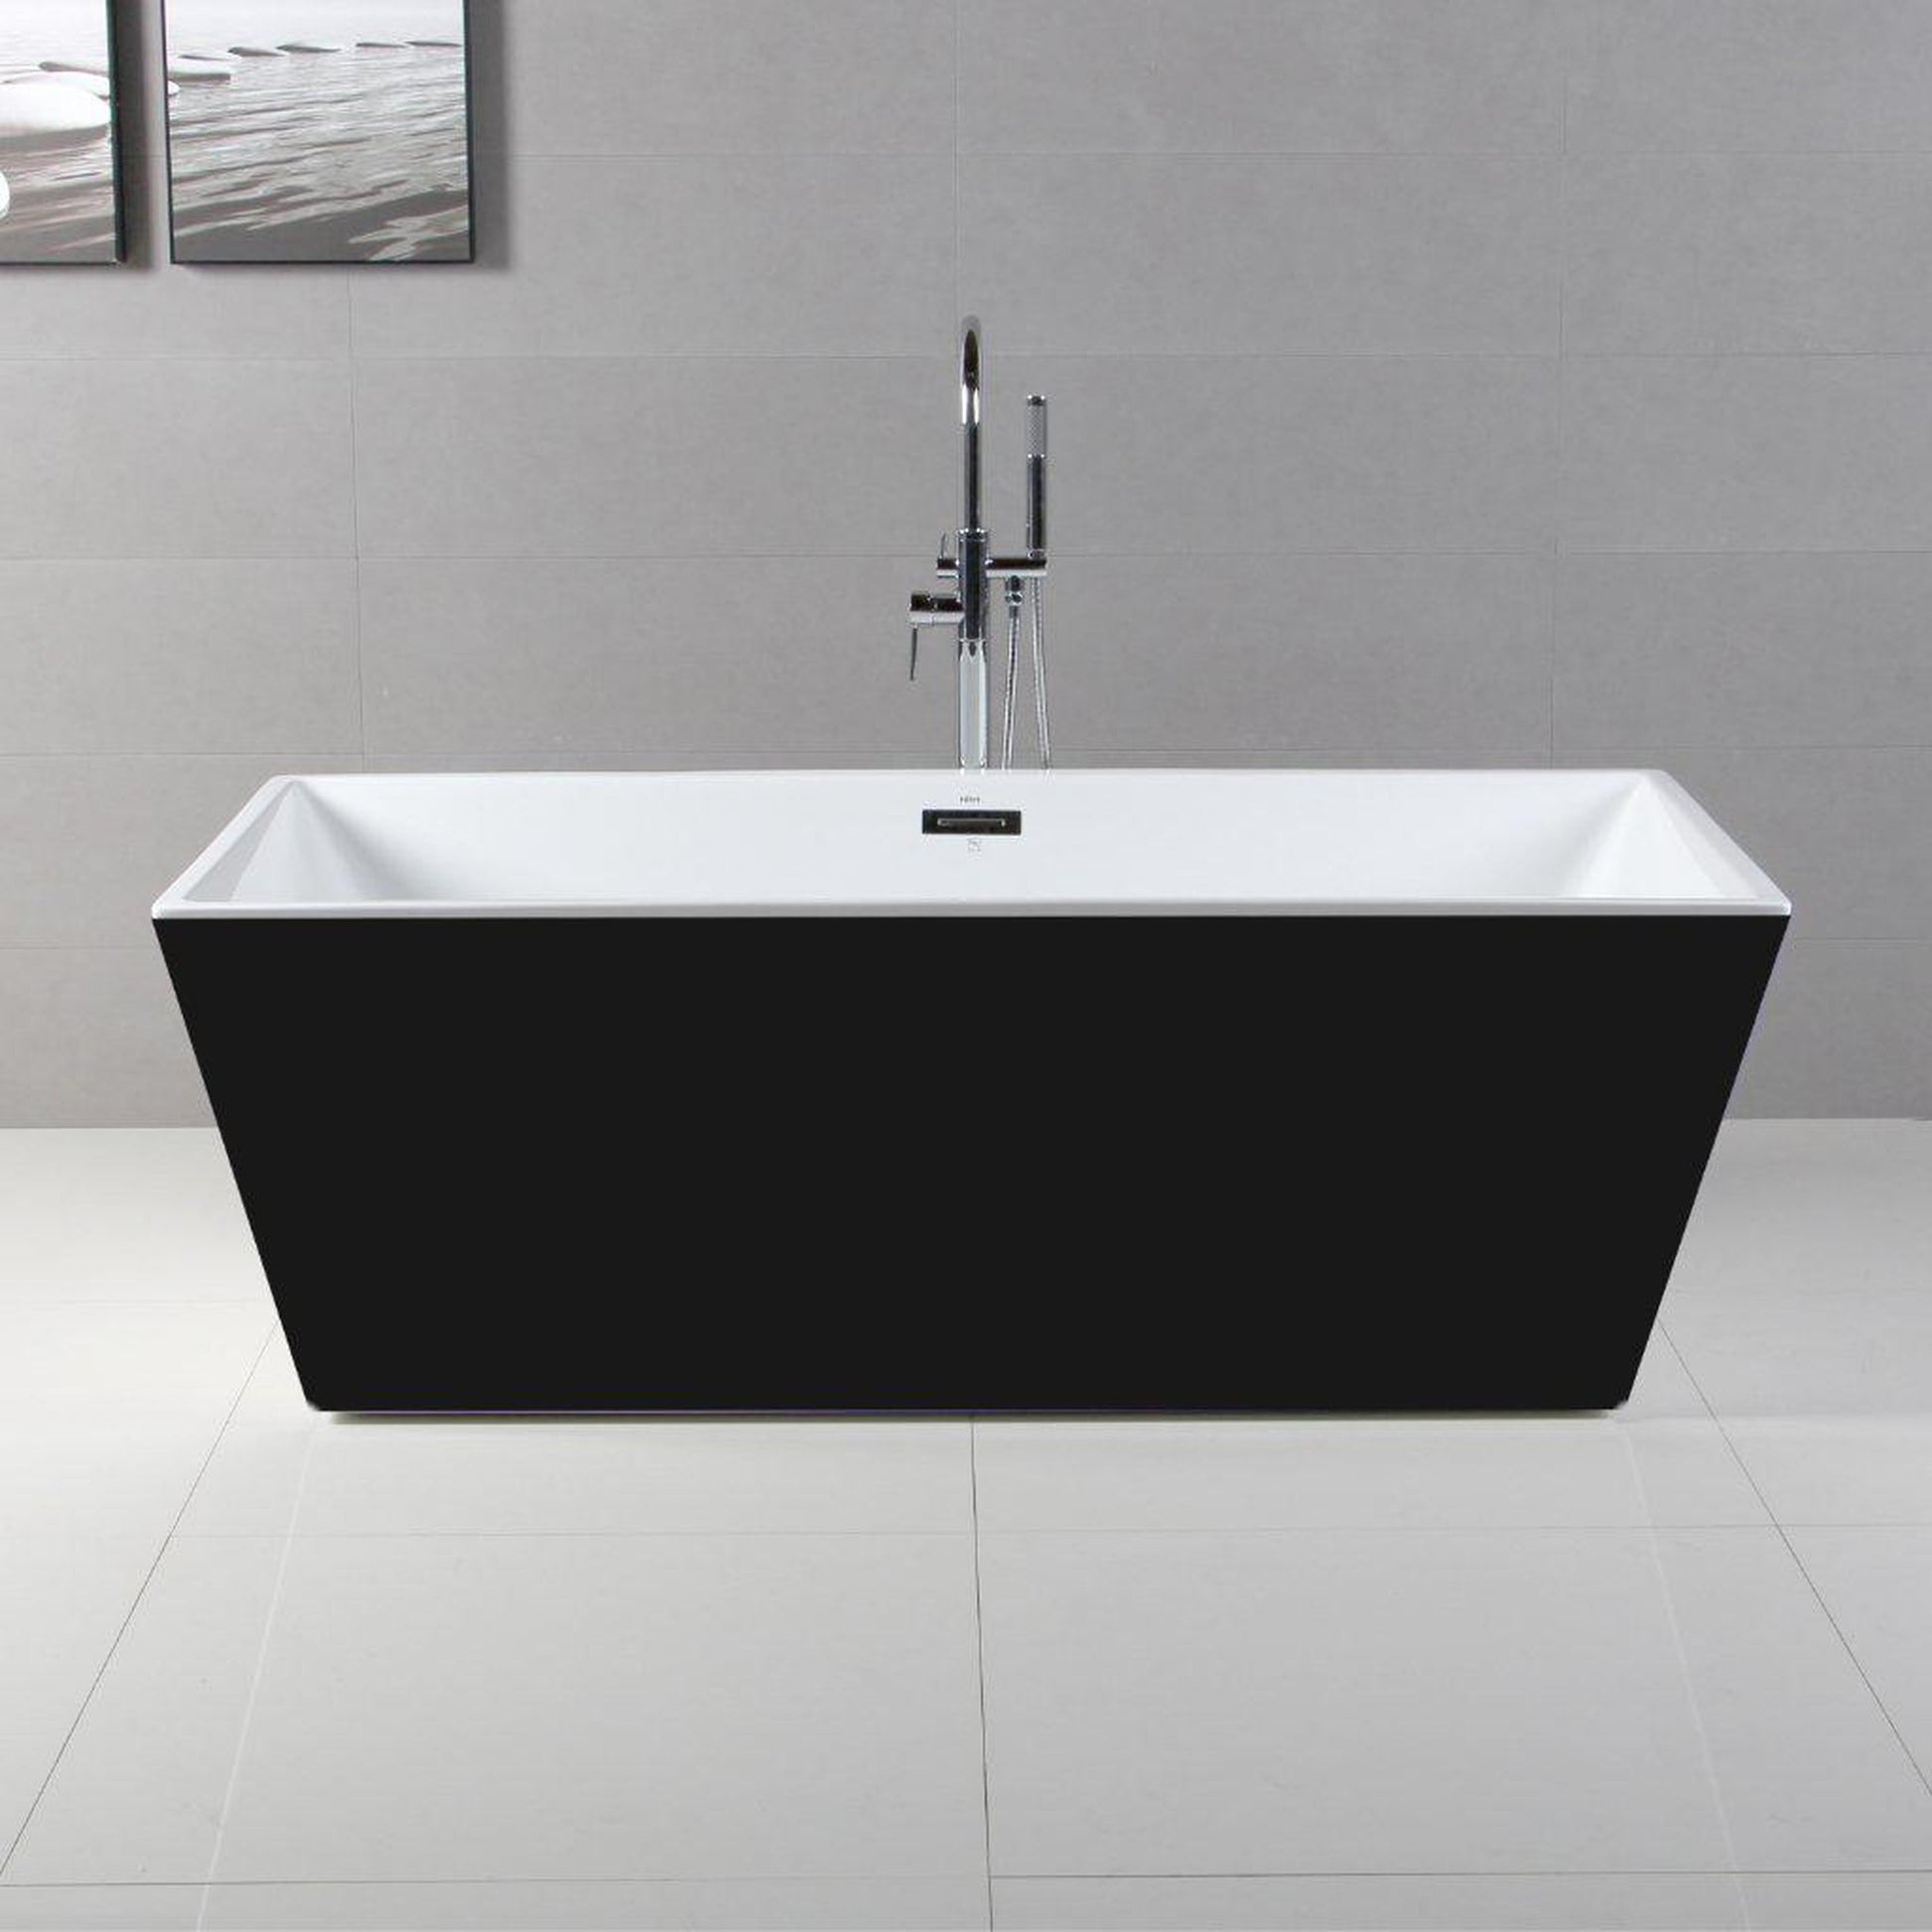 ALFI Brand AB8834 59" One Person Freestanding Black & White Rectangle Acrylic Soaking Bathtub